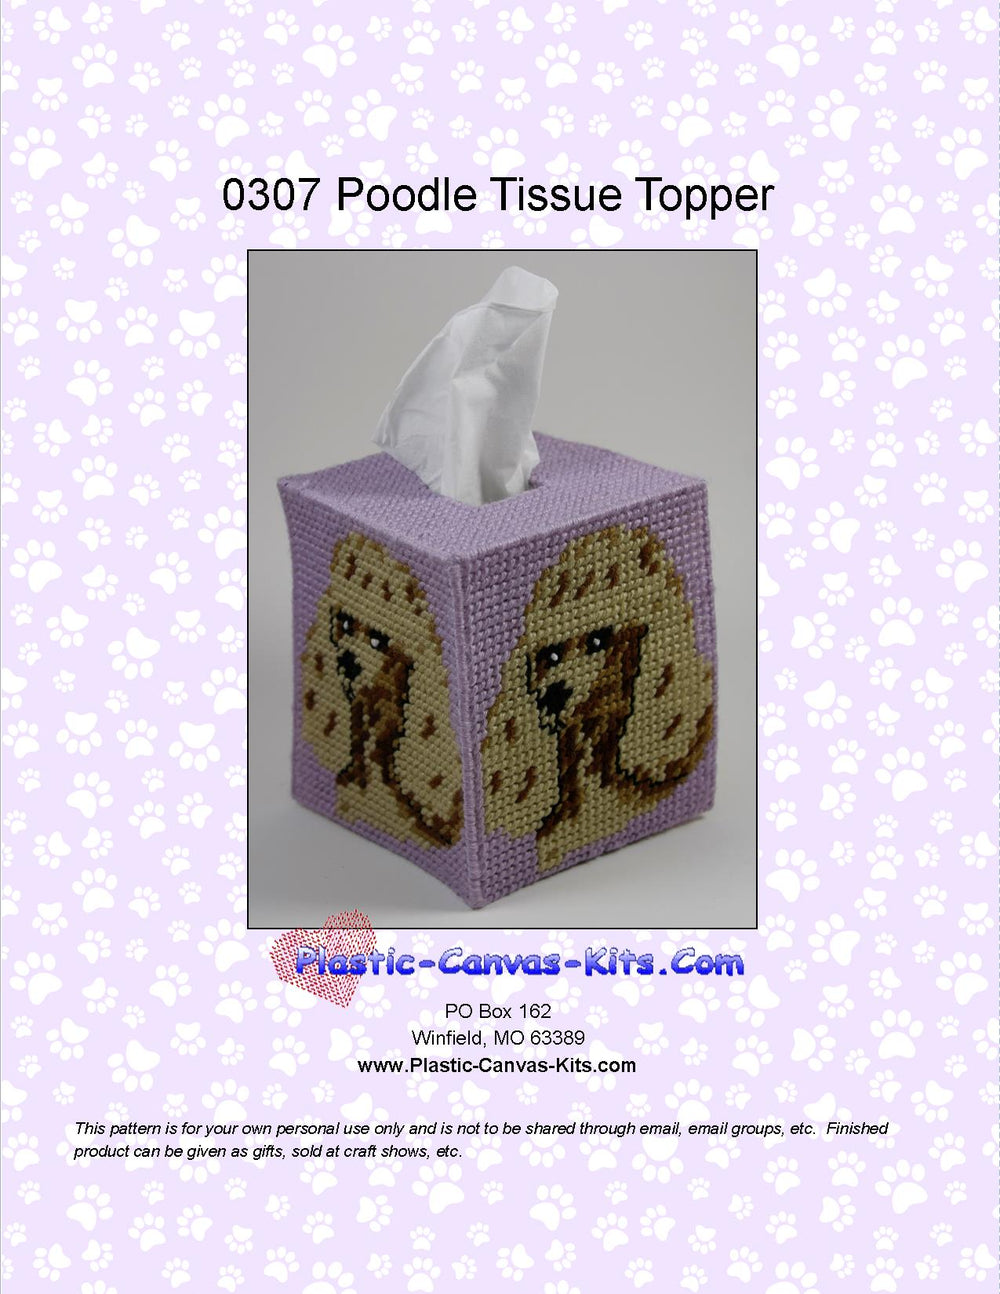 Poodle Tissue Topper